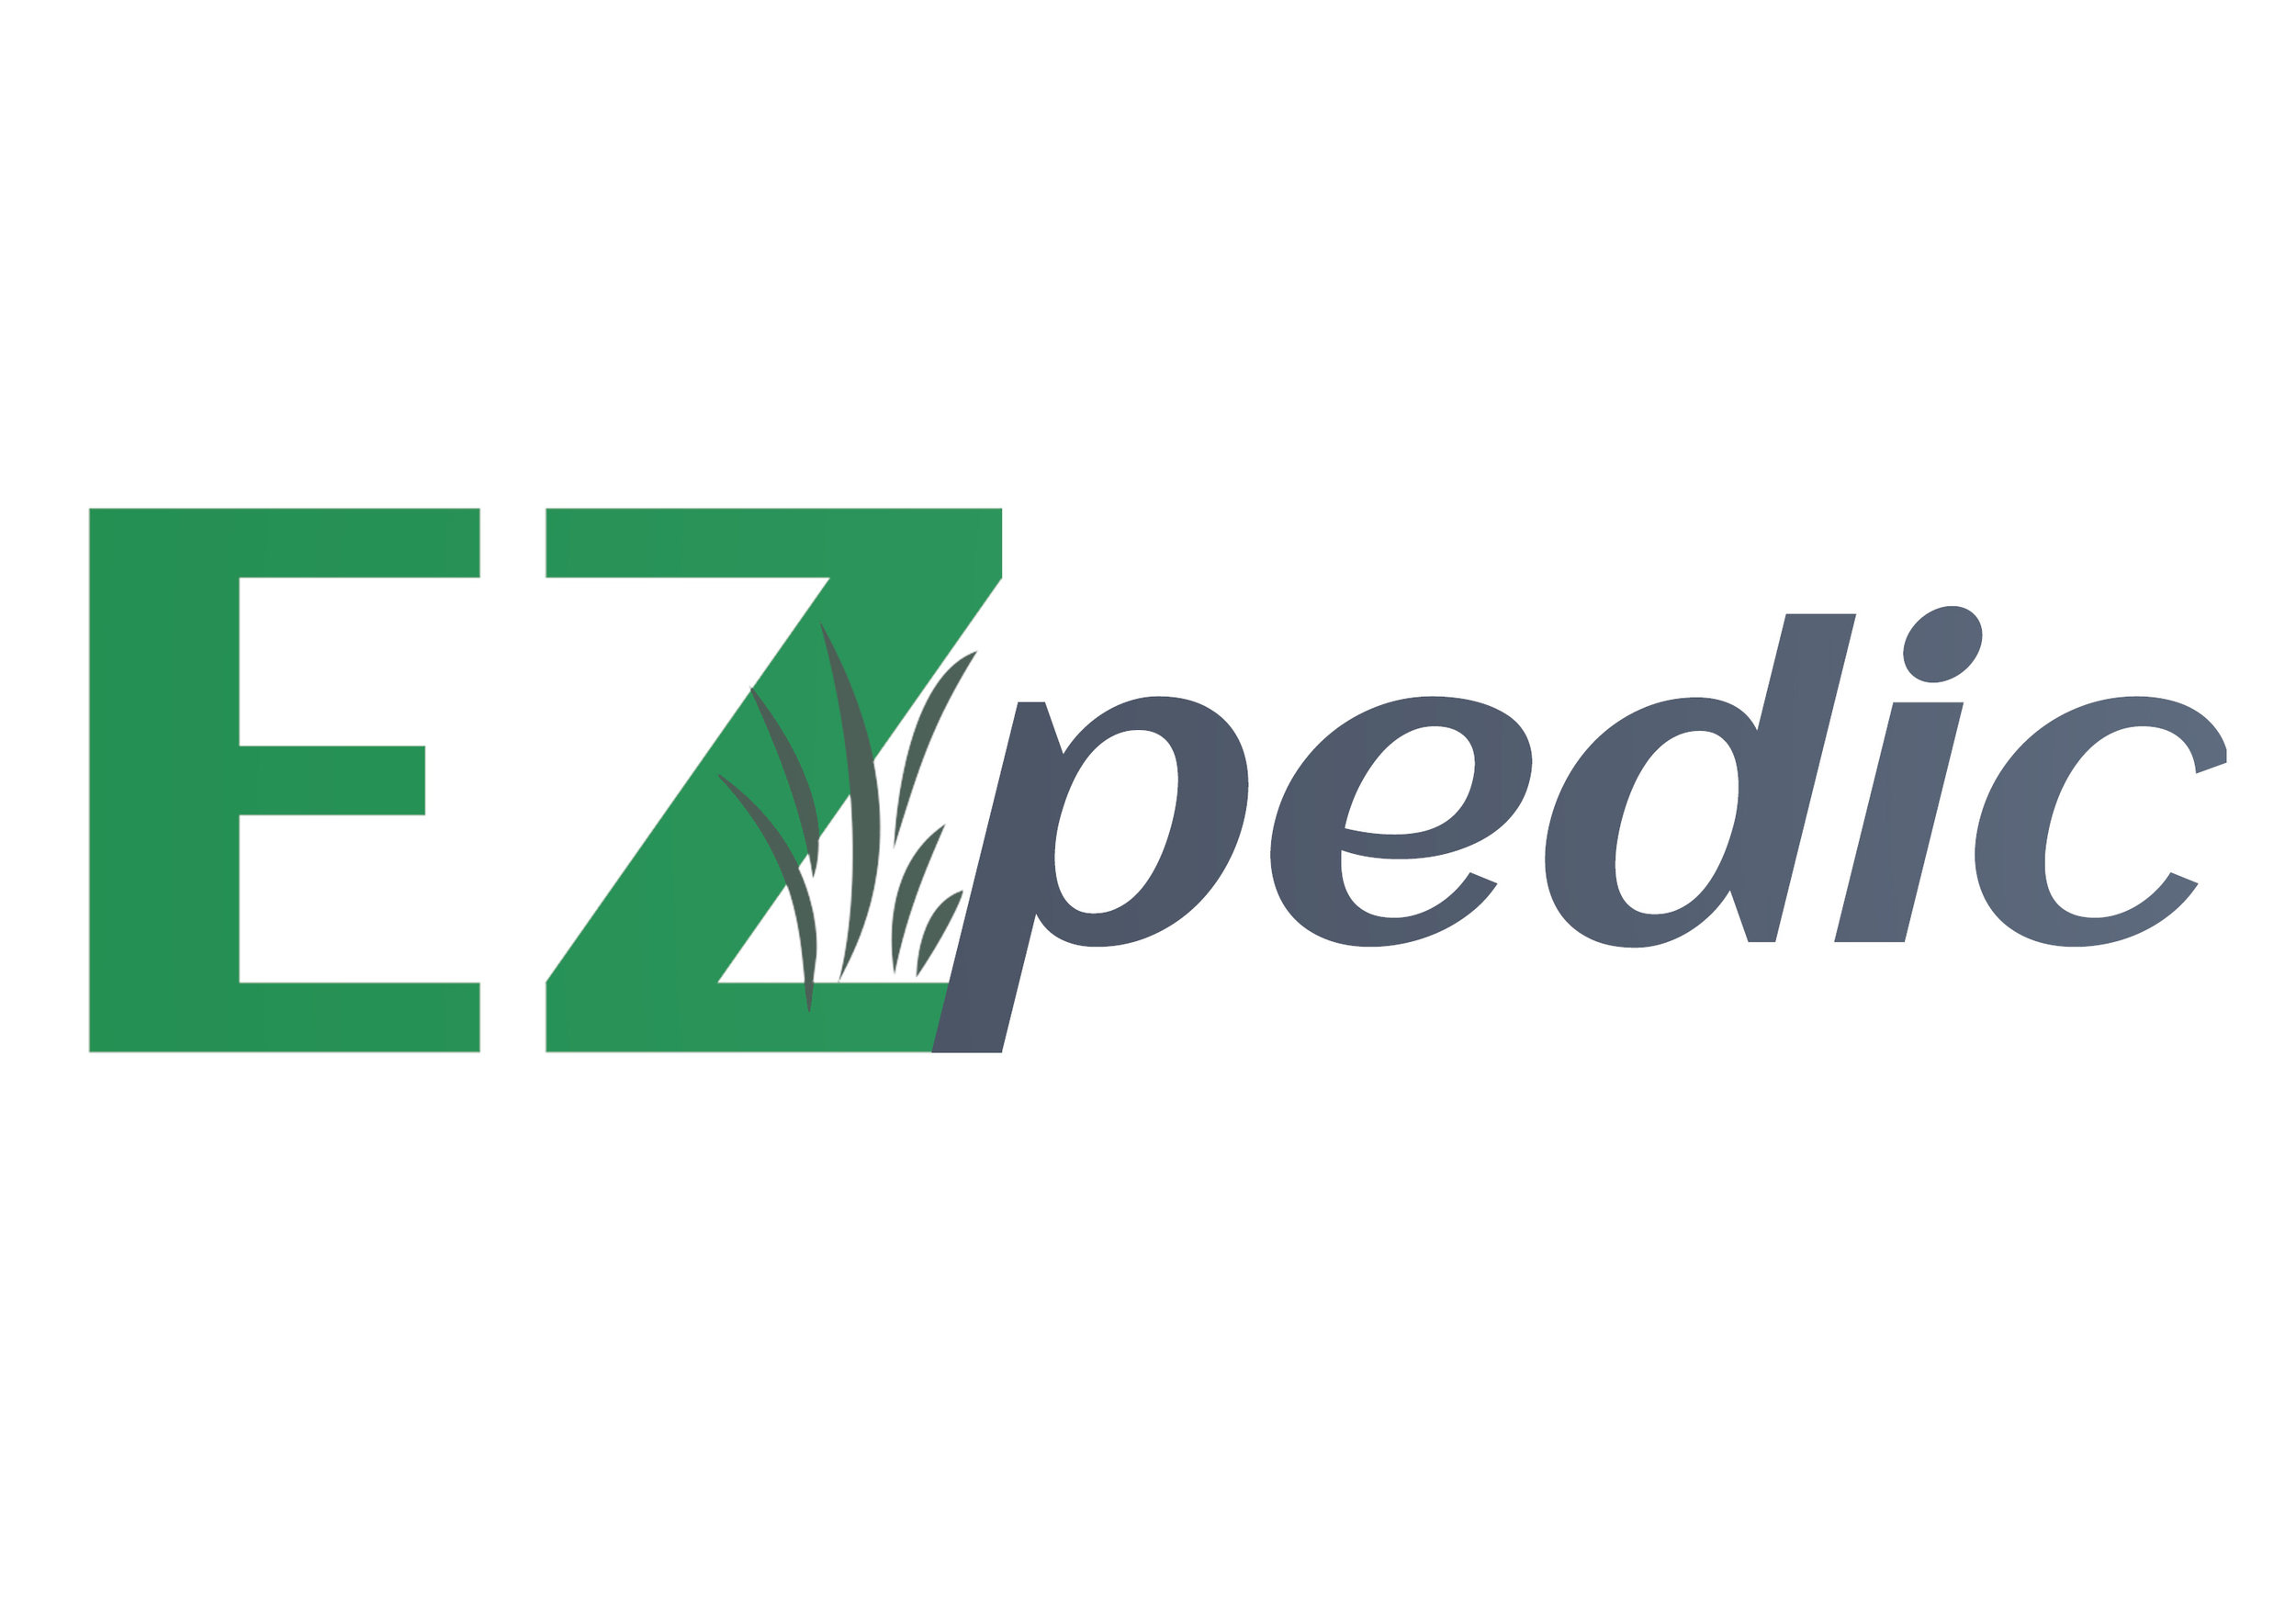 EZ Pedic Logo Crop.jpg